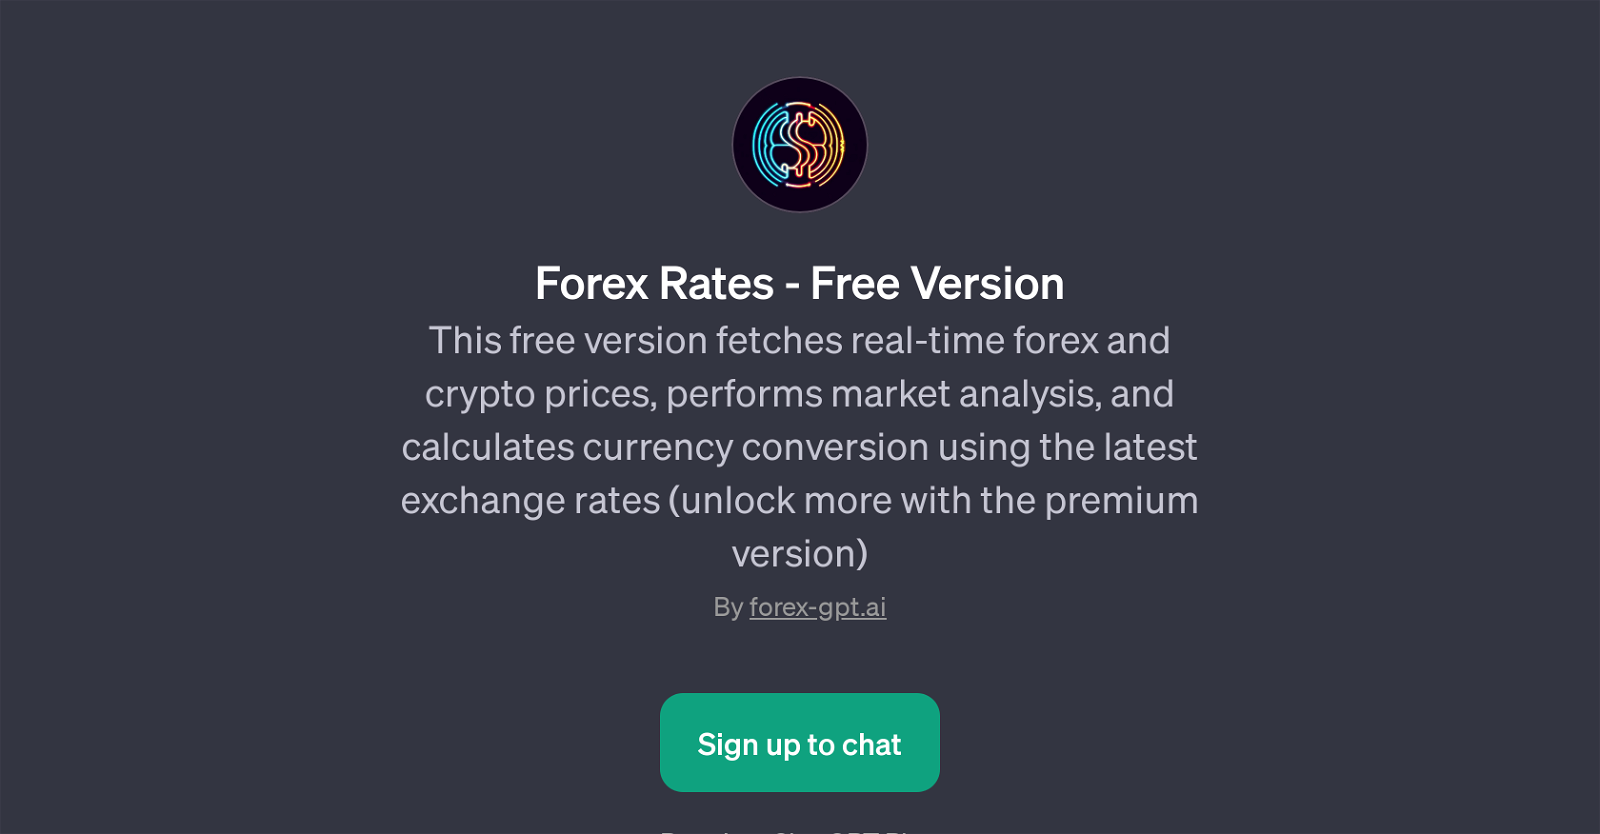 Forex Rates - Free Version website